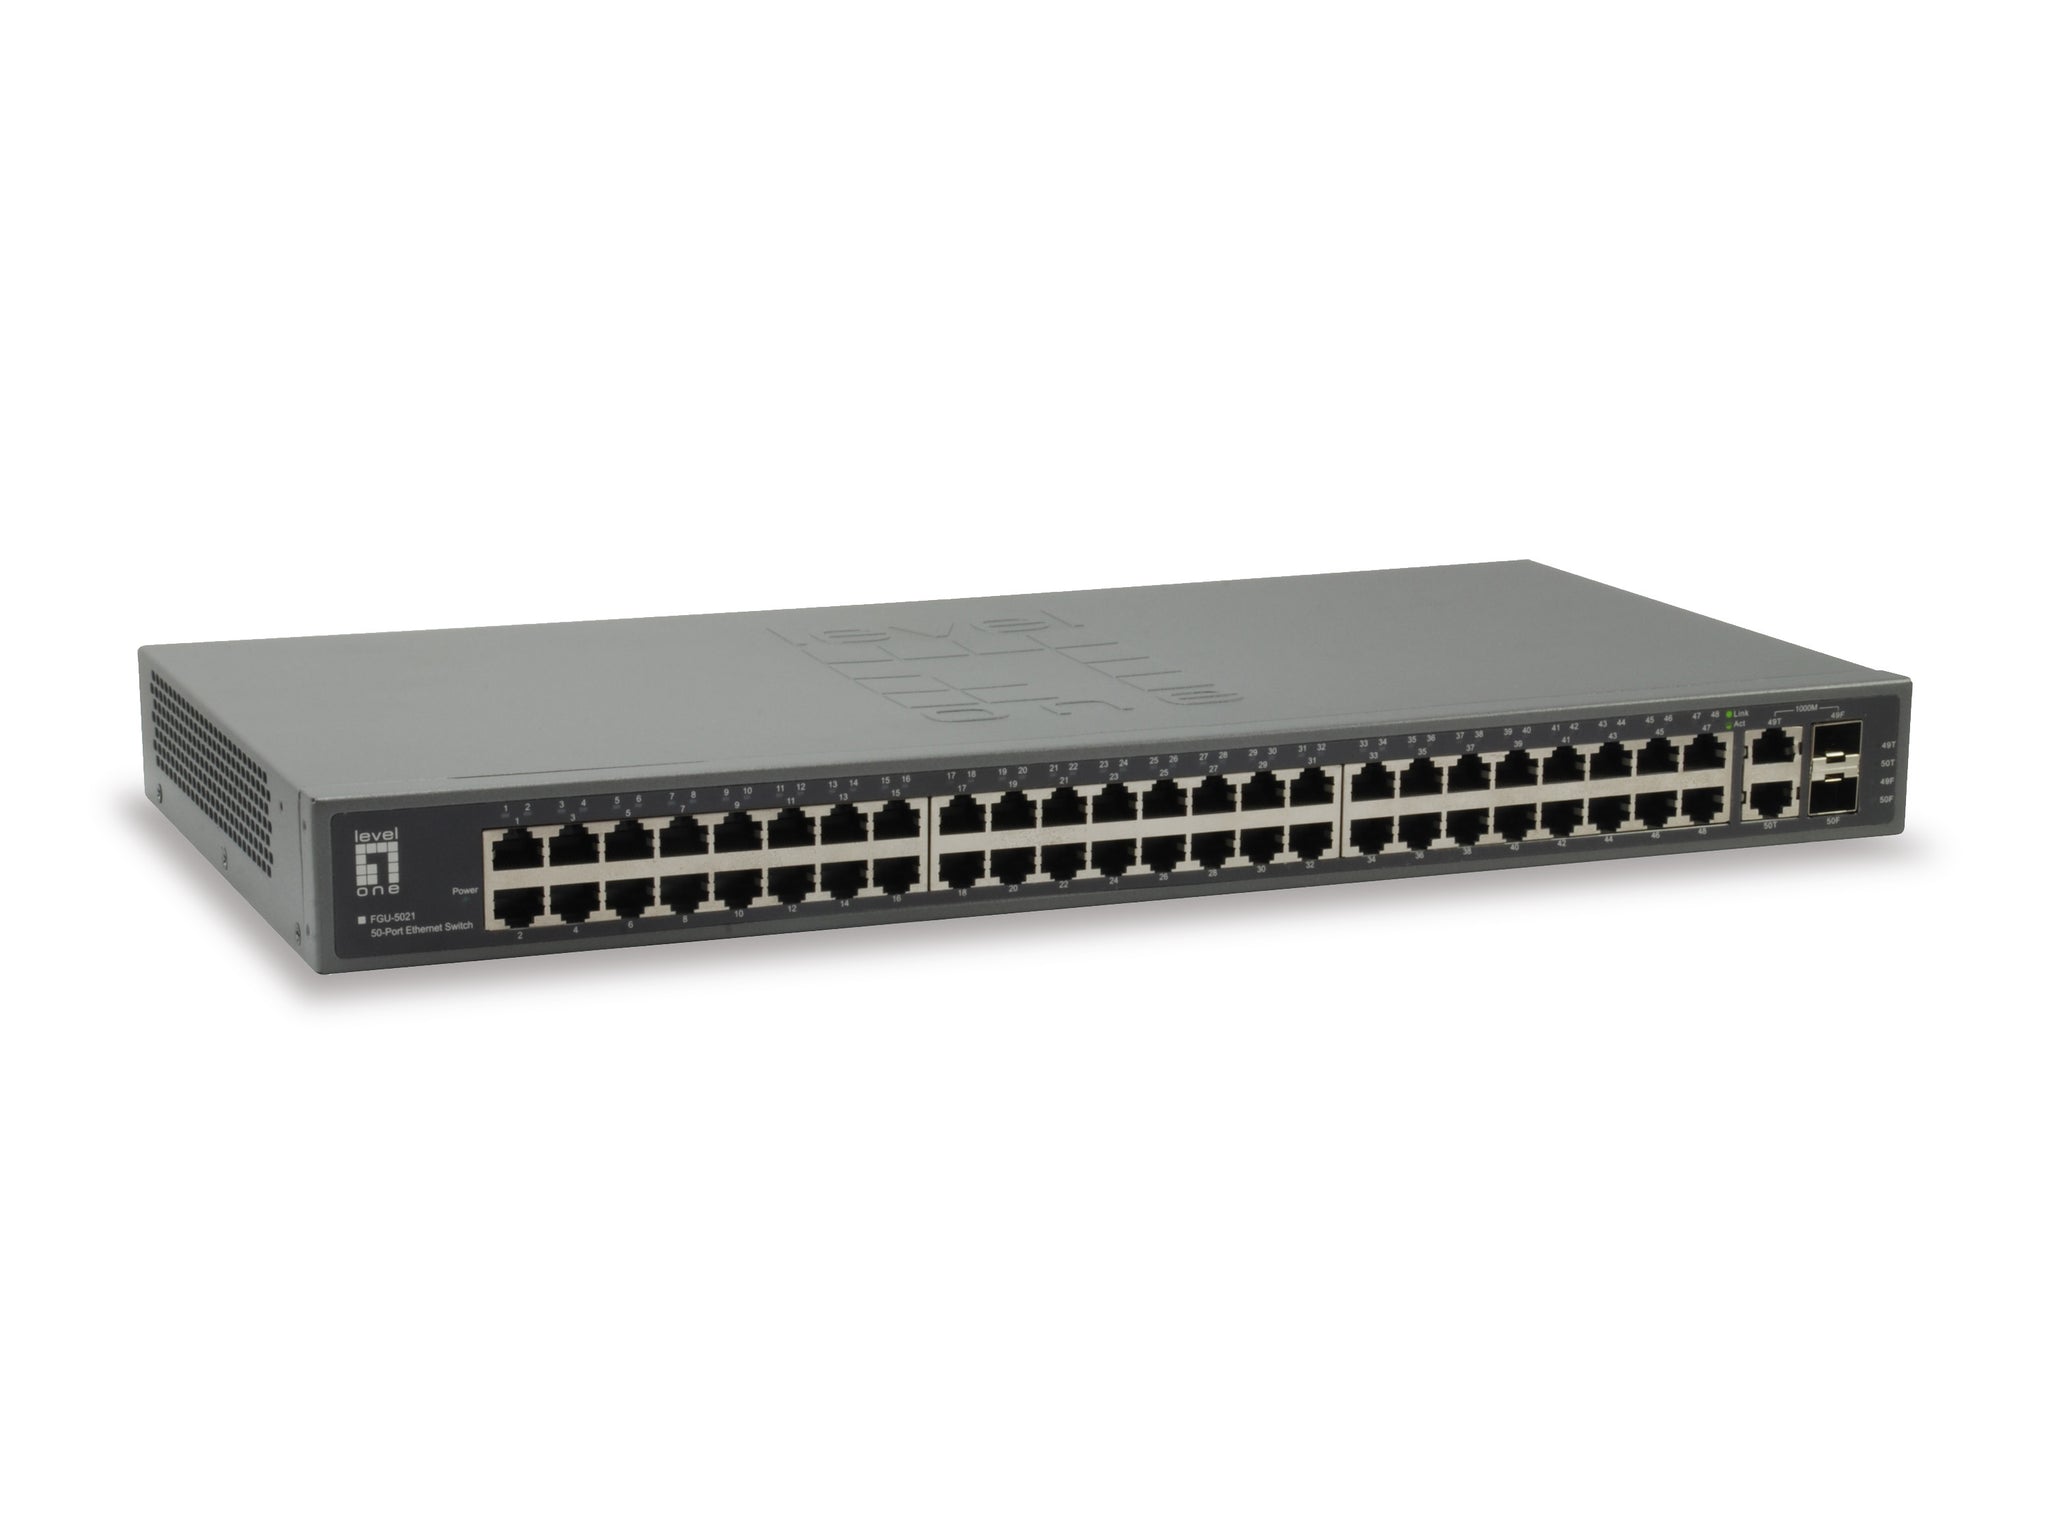 Conmutador Fast Ethernet de 50 puertos FGU-5021, combinación de 2 Gigabit SFP/RJ45